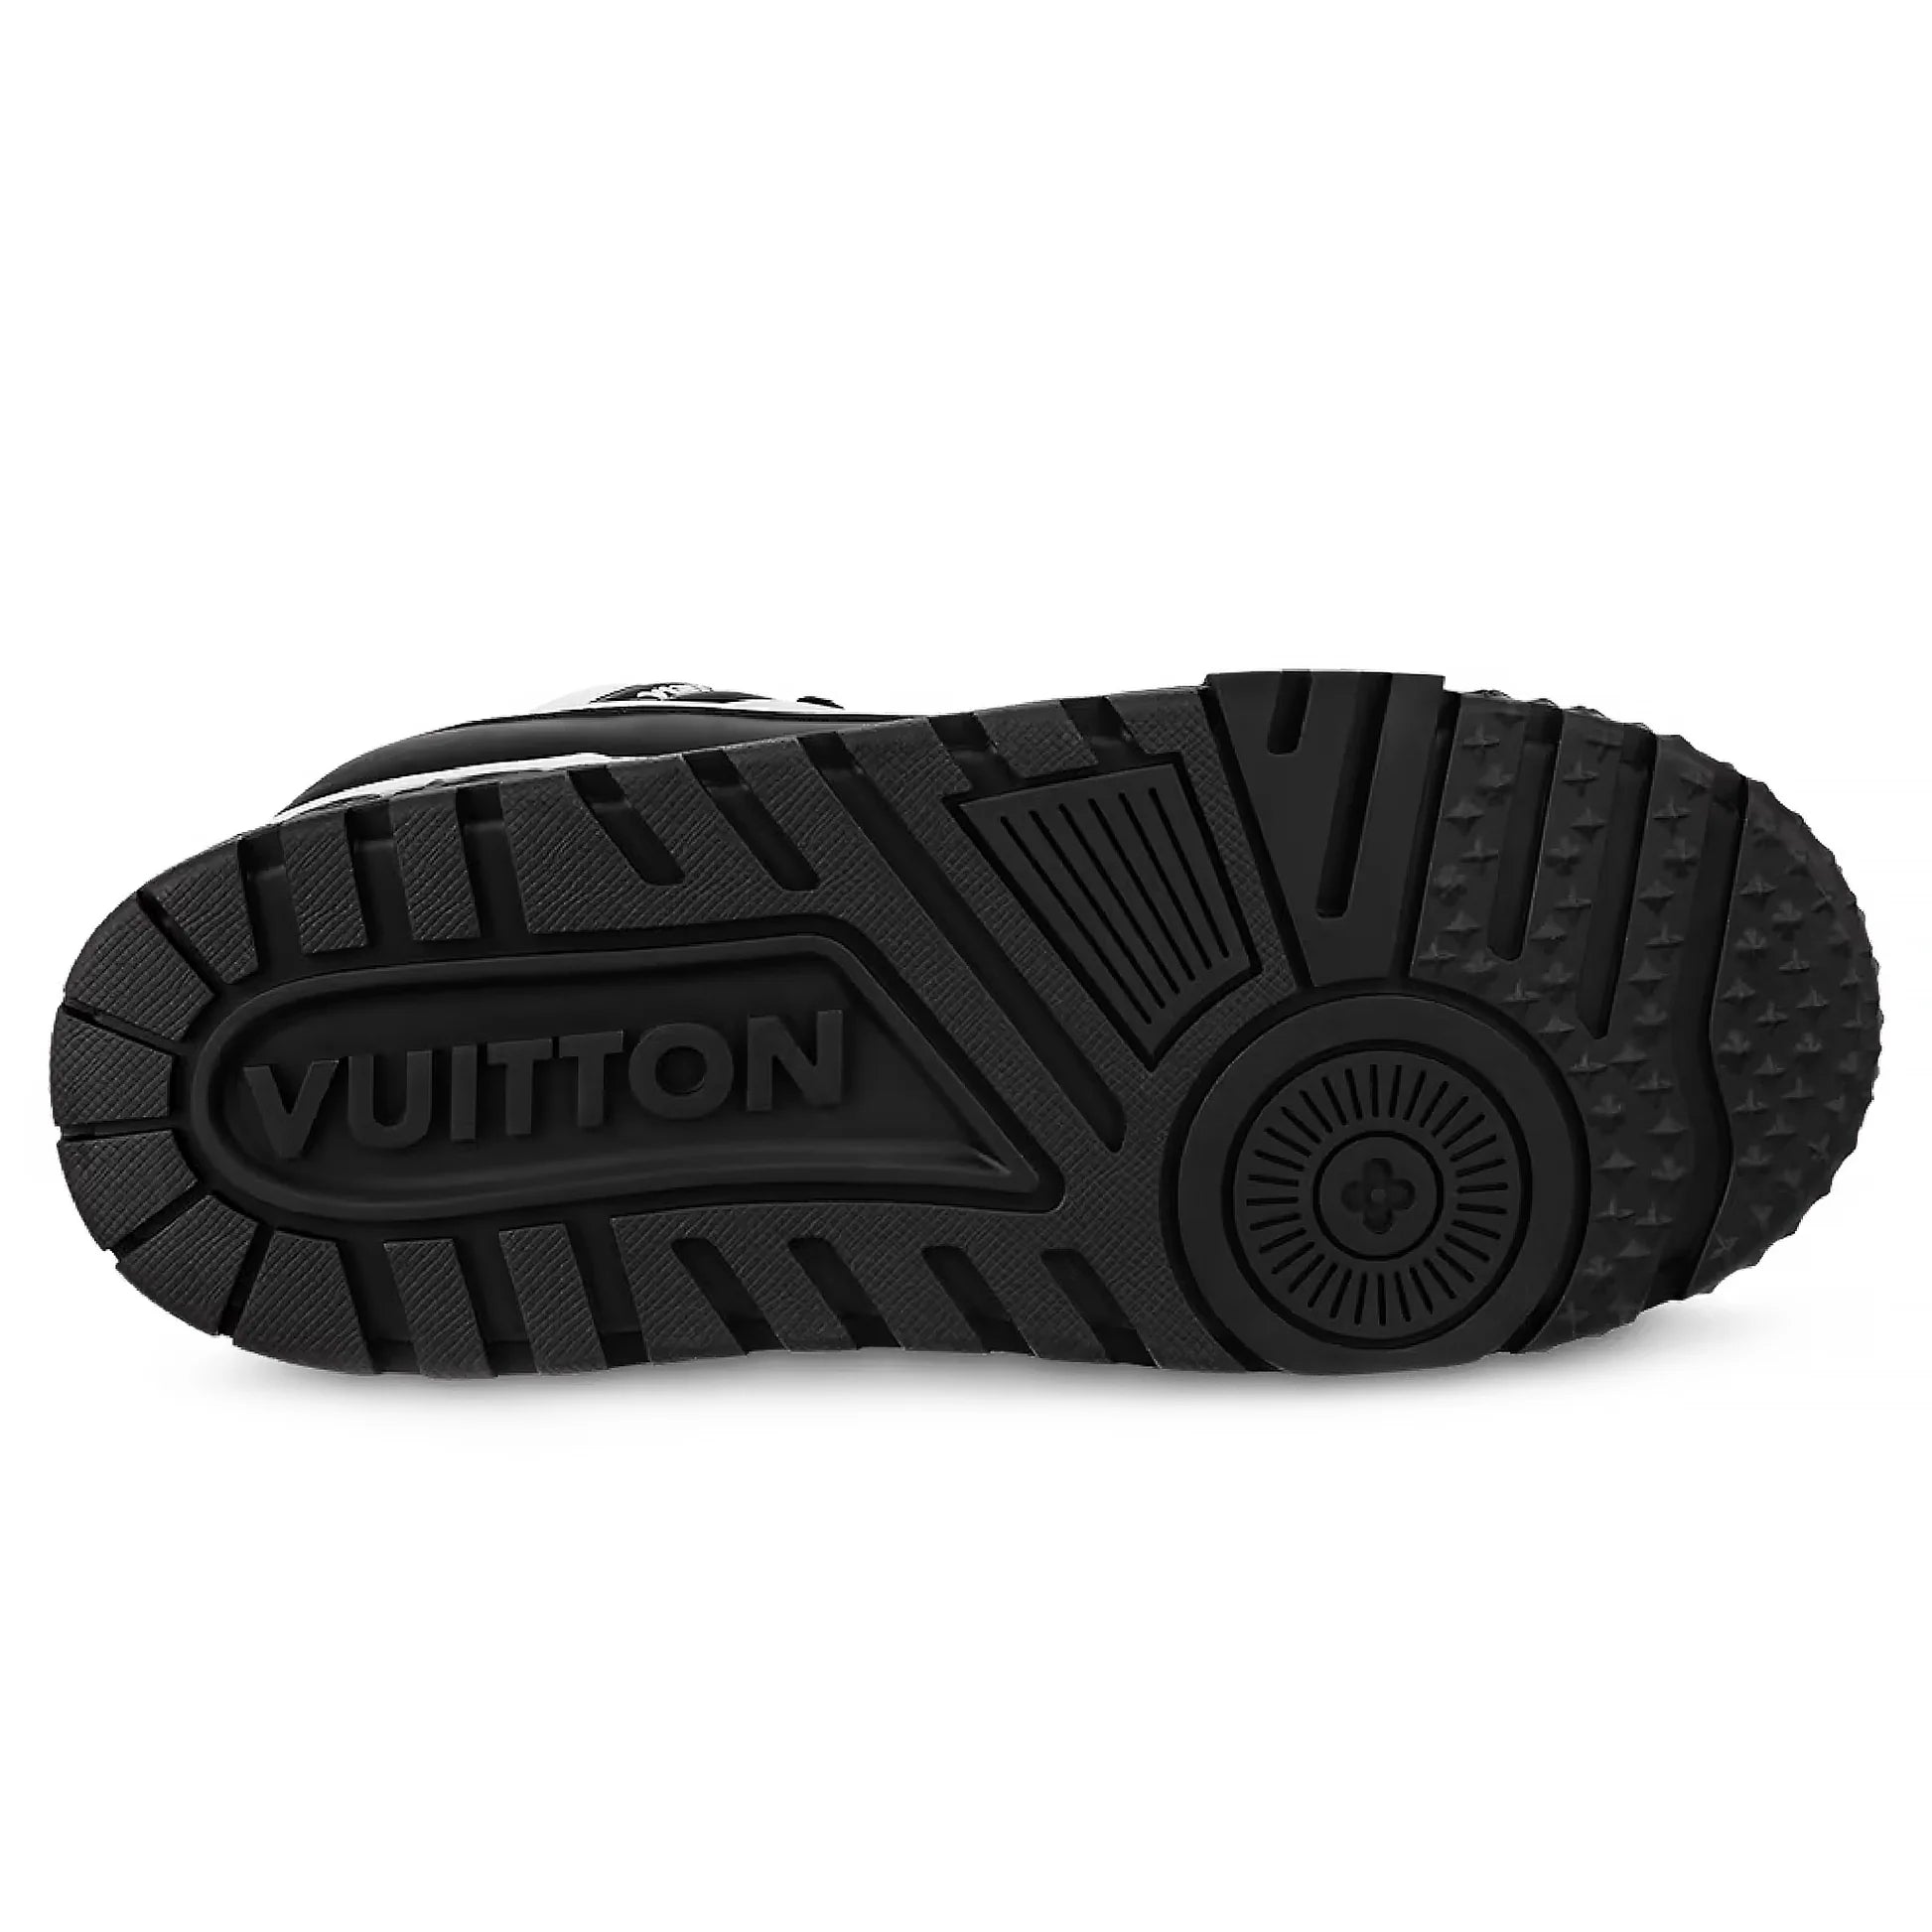 Louis Vuitton LV Maxi Trainer Black Sneaker